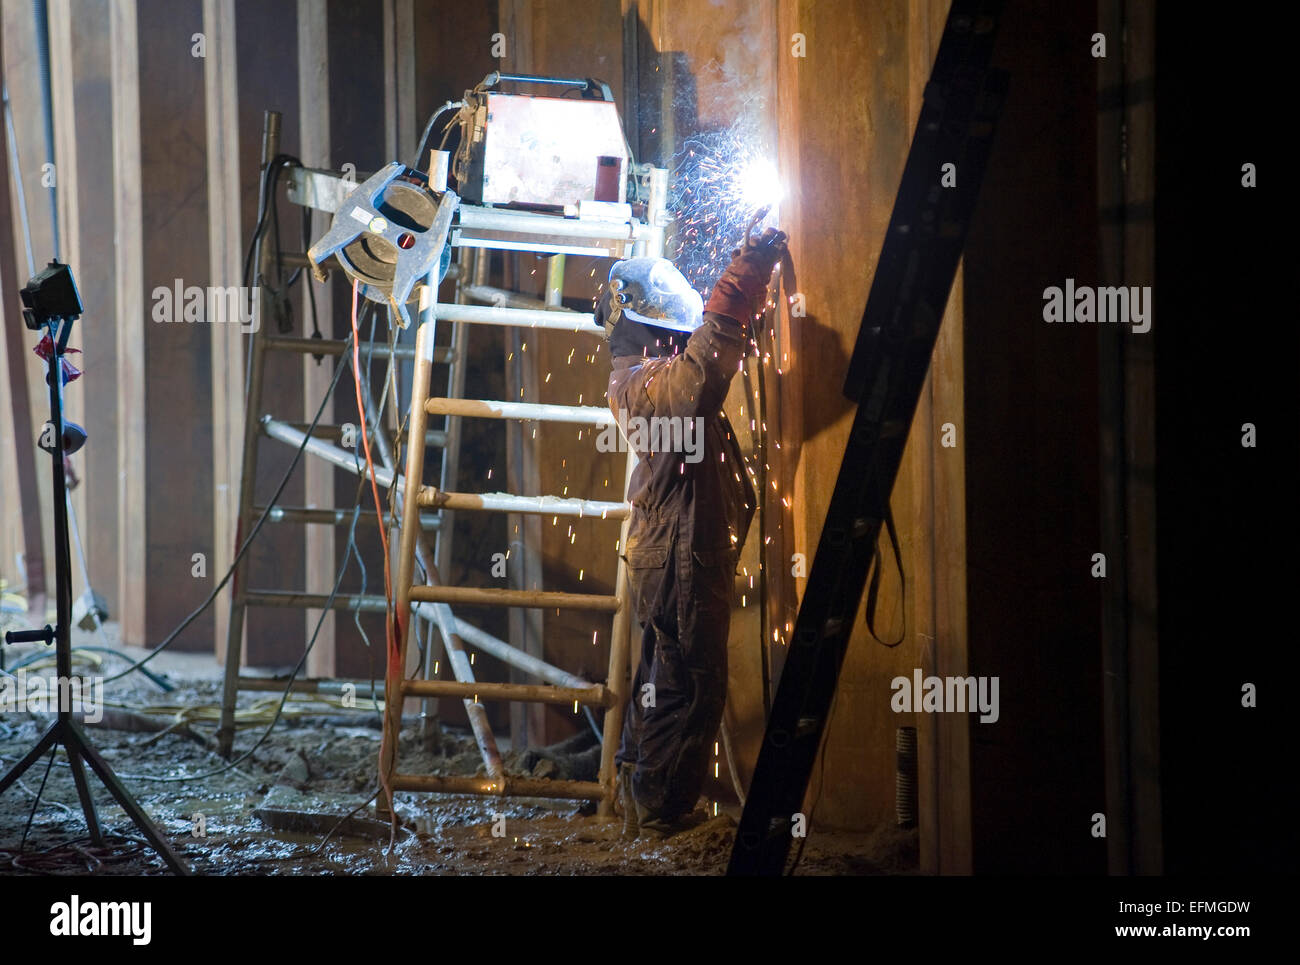 ENSCHEDE, THE NETHERLANDS - 27 OKT, 2014: Welder at work on a construction site Stock Photo